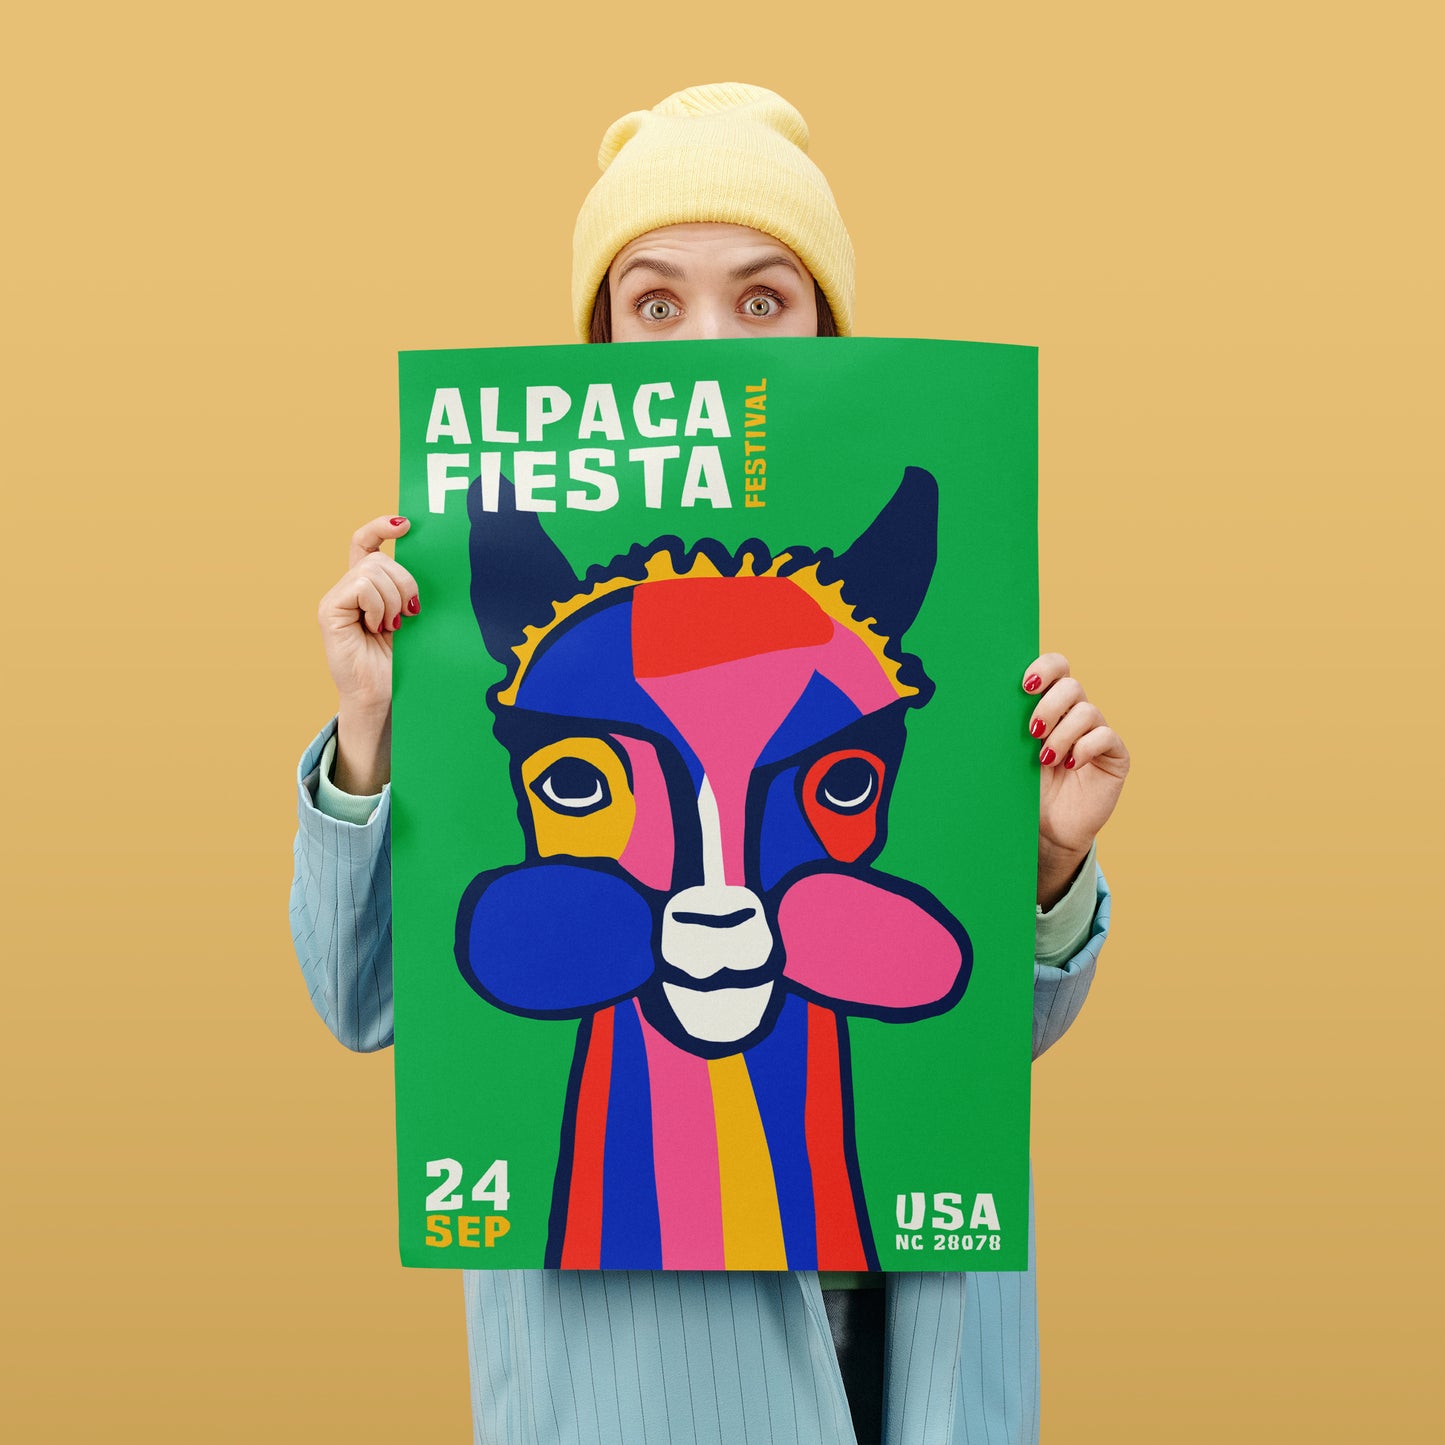 Alpaca Fiesta USA Festival Poster